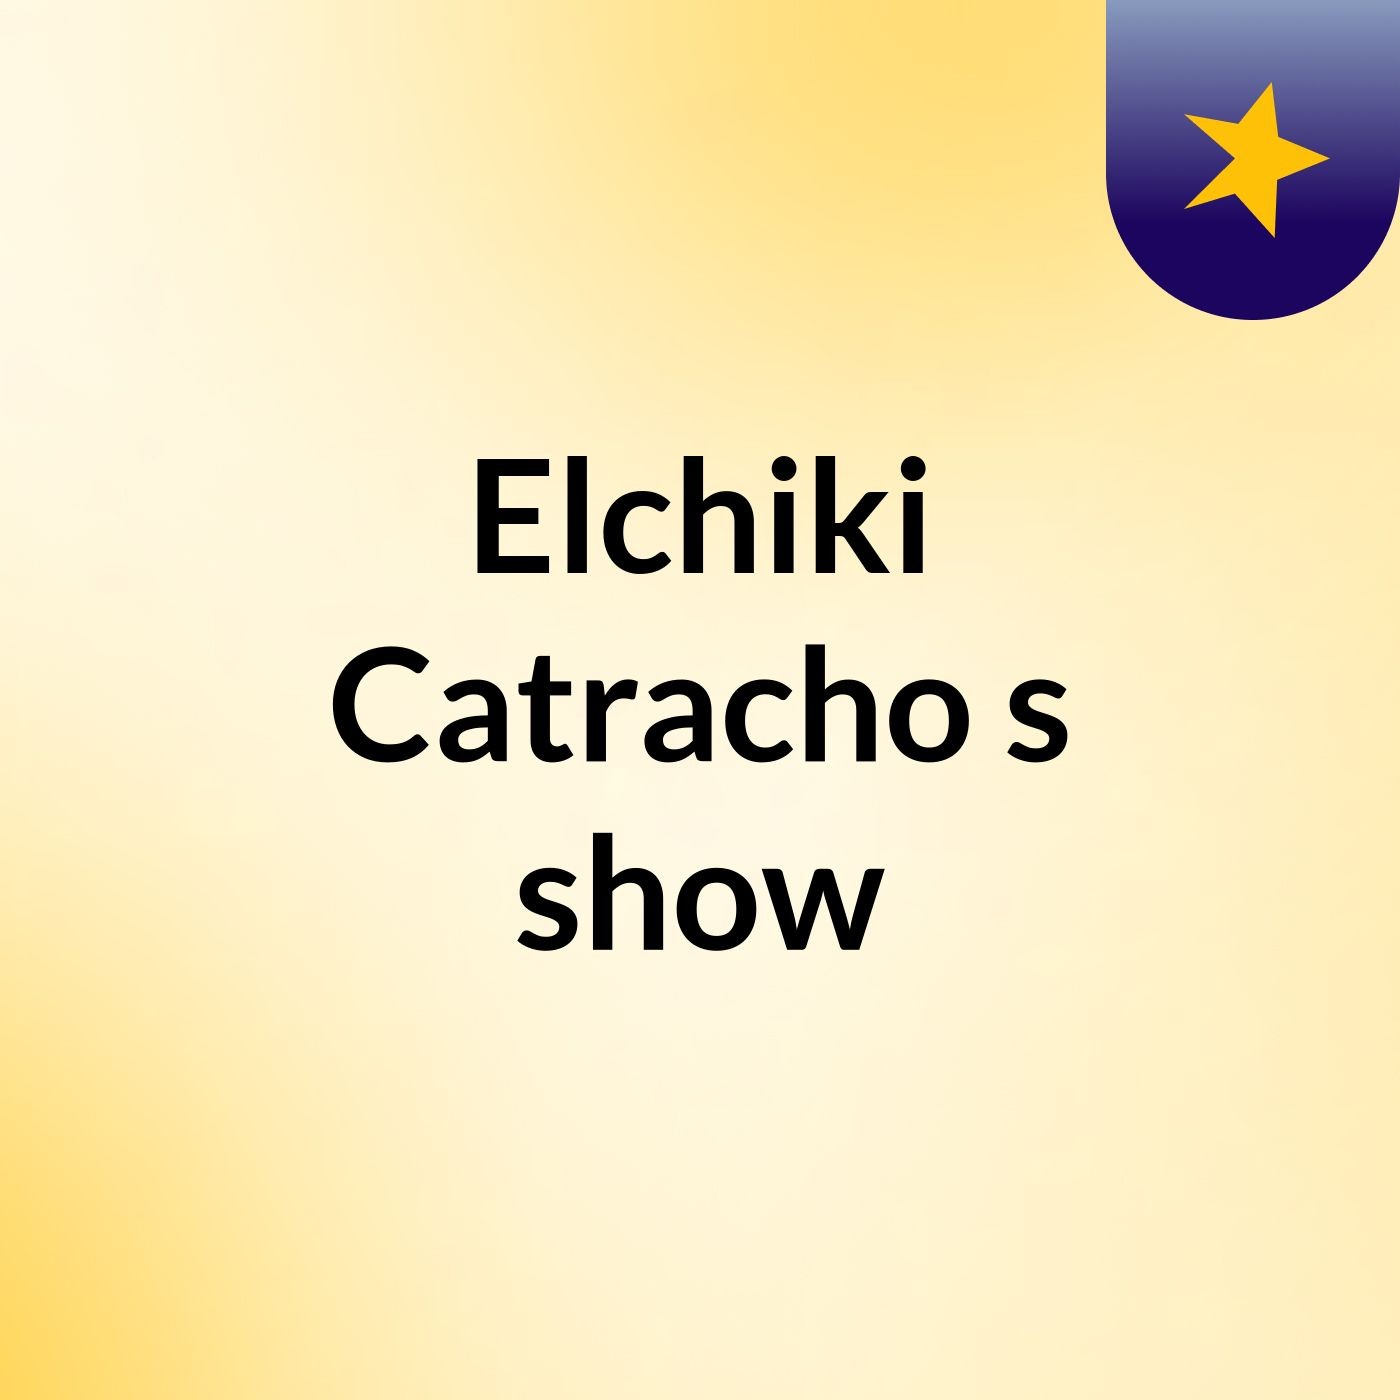 Elchiki Catracho's show